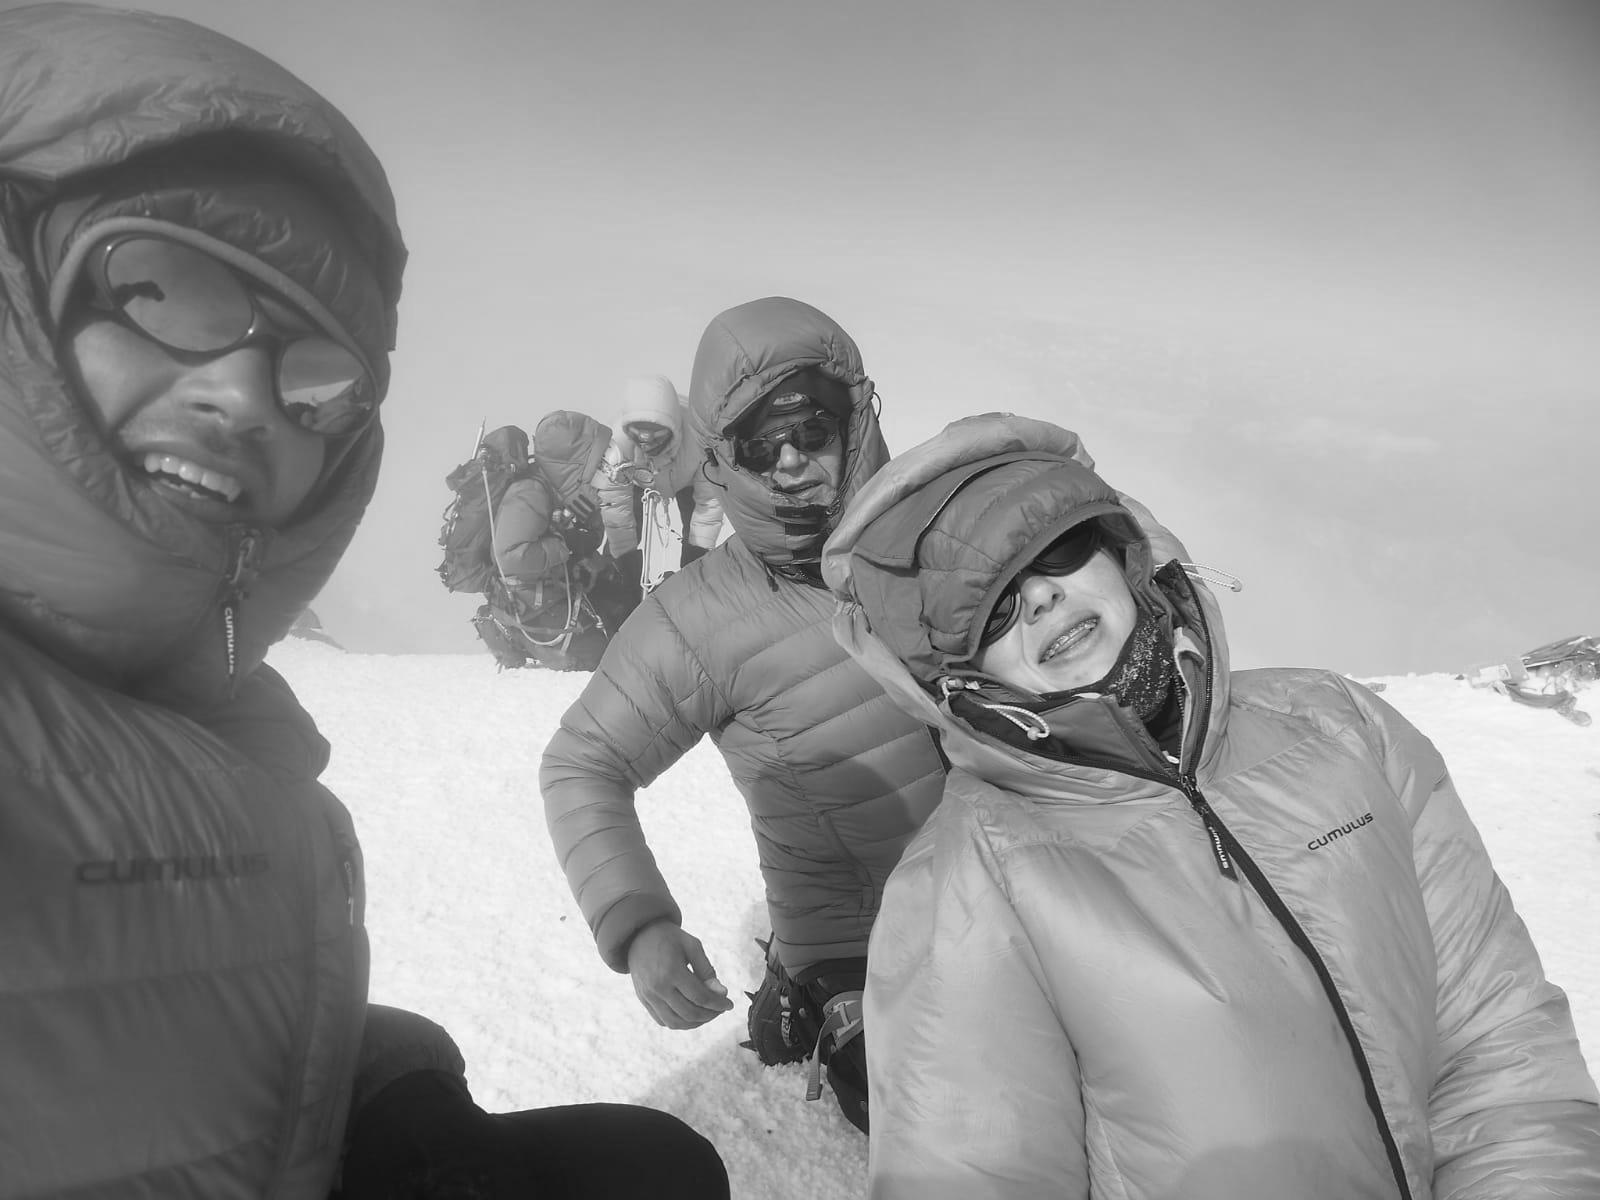 Elbrus 5642 m.n.p.m. – zdobyty!